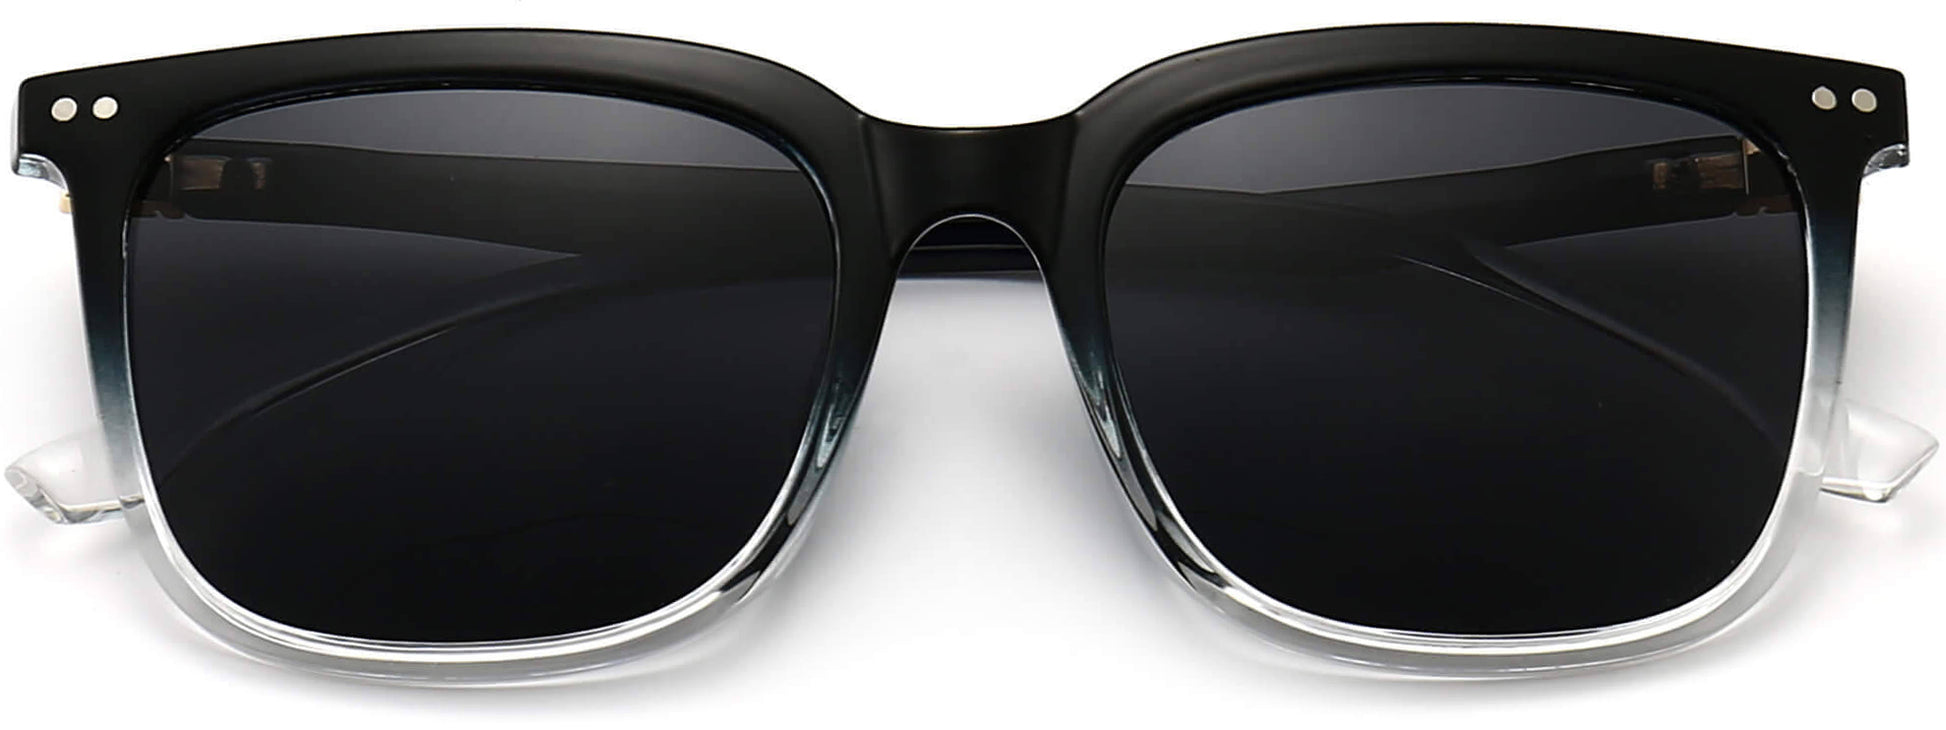 Sofia Black Plastic Sunglasses from ANRRI, closed view